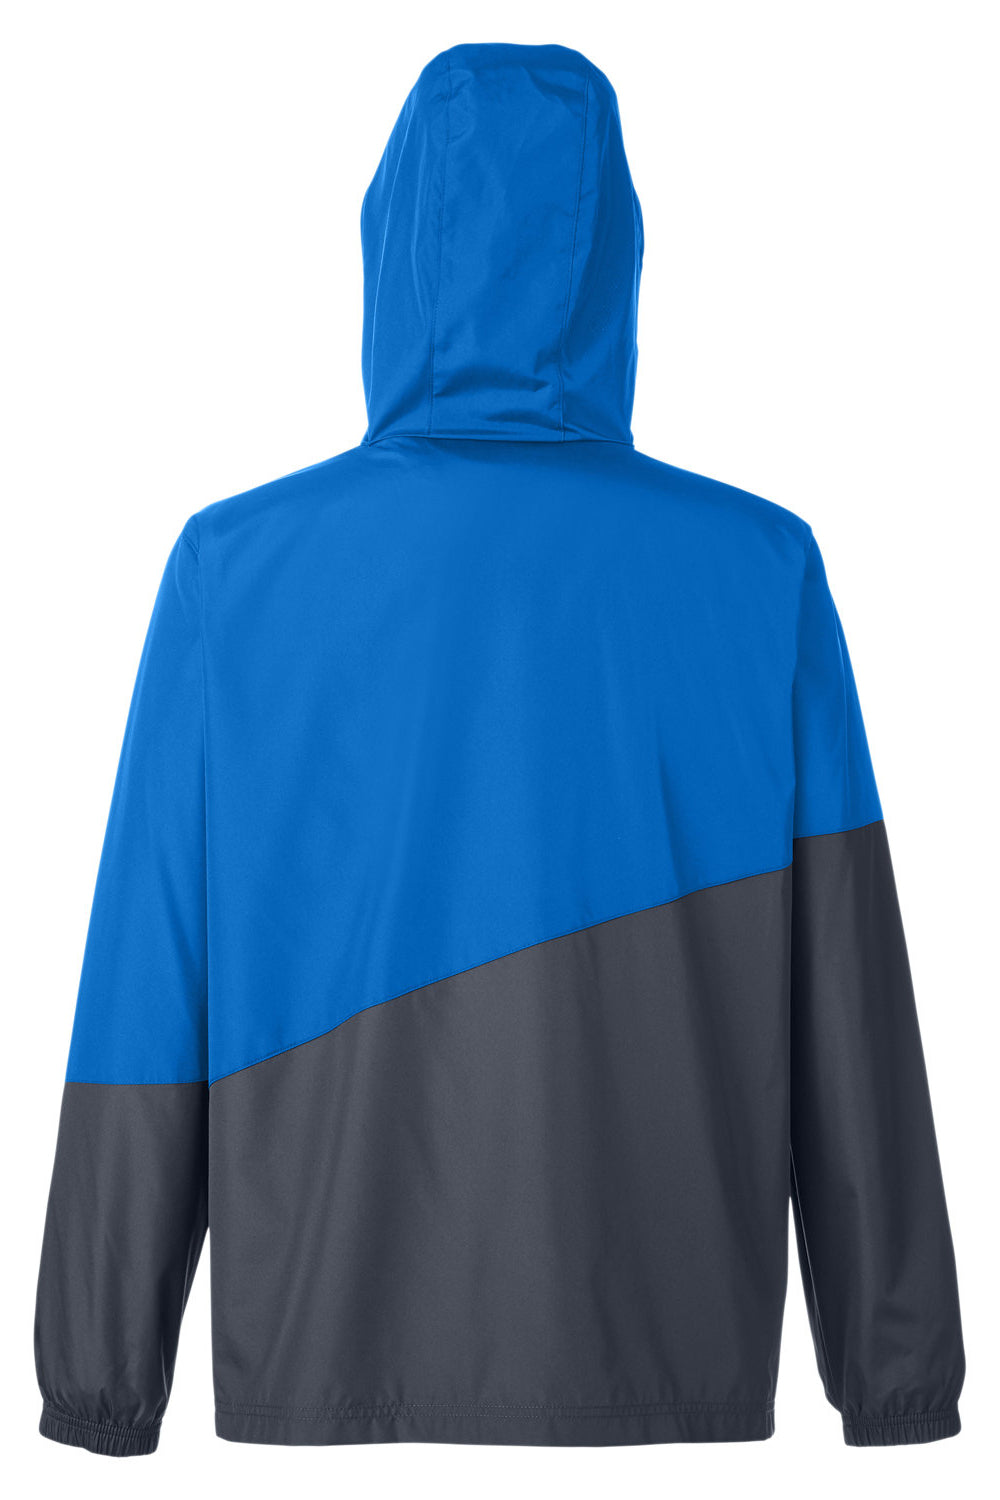 Core 365 CE710 Mens Techno Lite Colorblock Full Zip Windbreaker Jacket True Royal Blue/Carbon Grey Flat Back